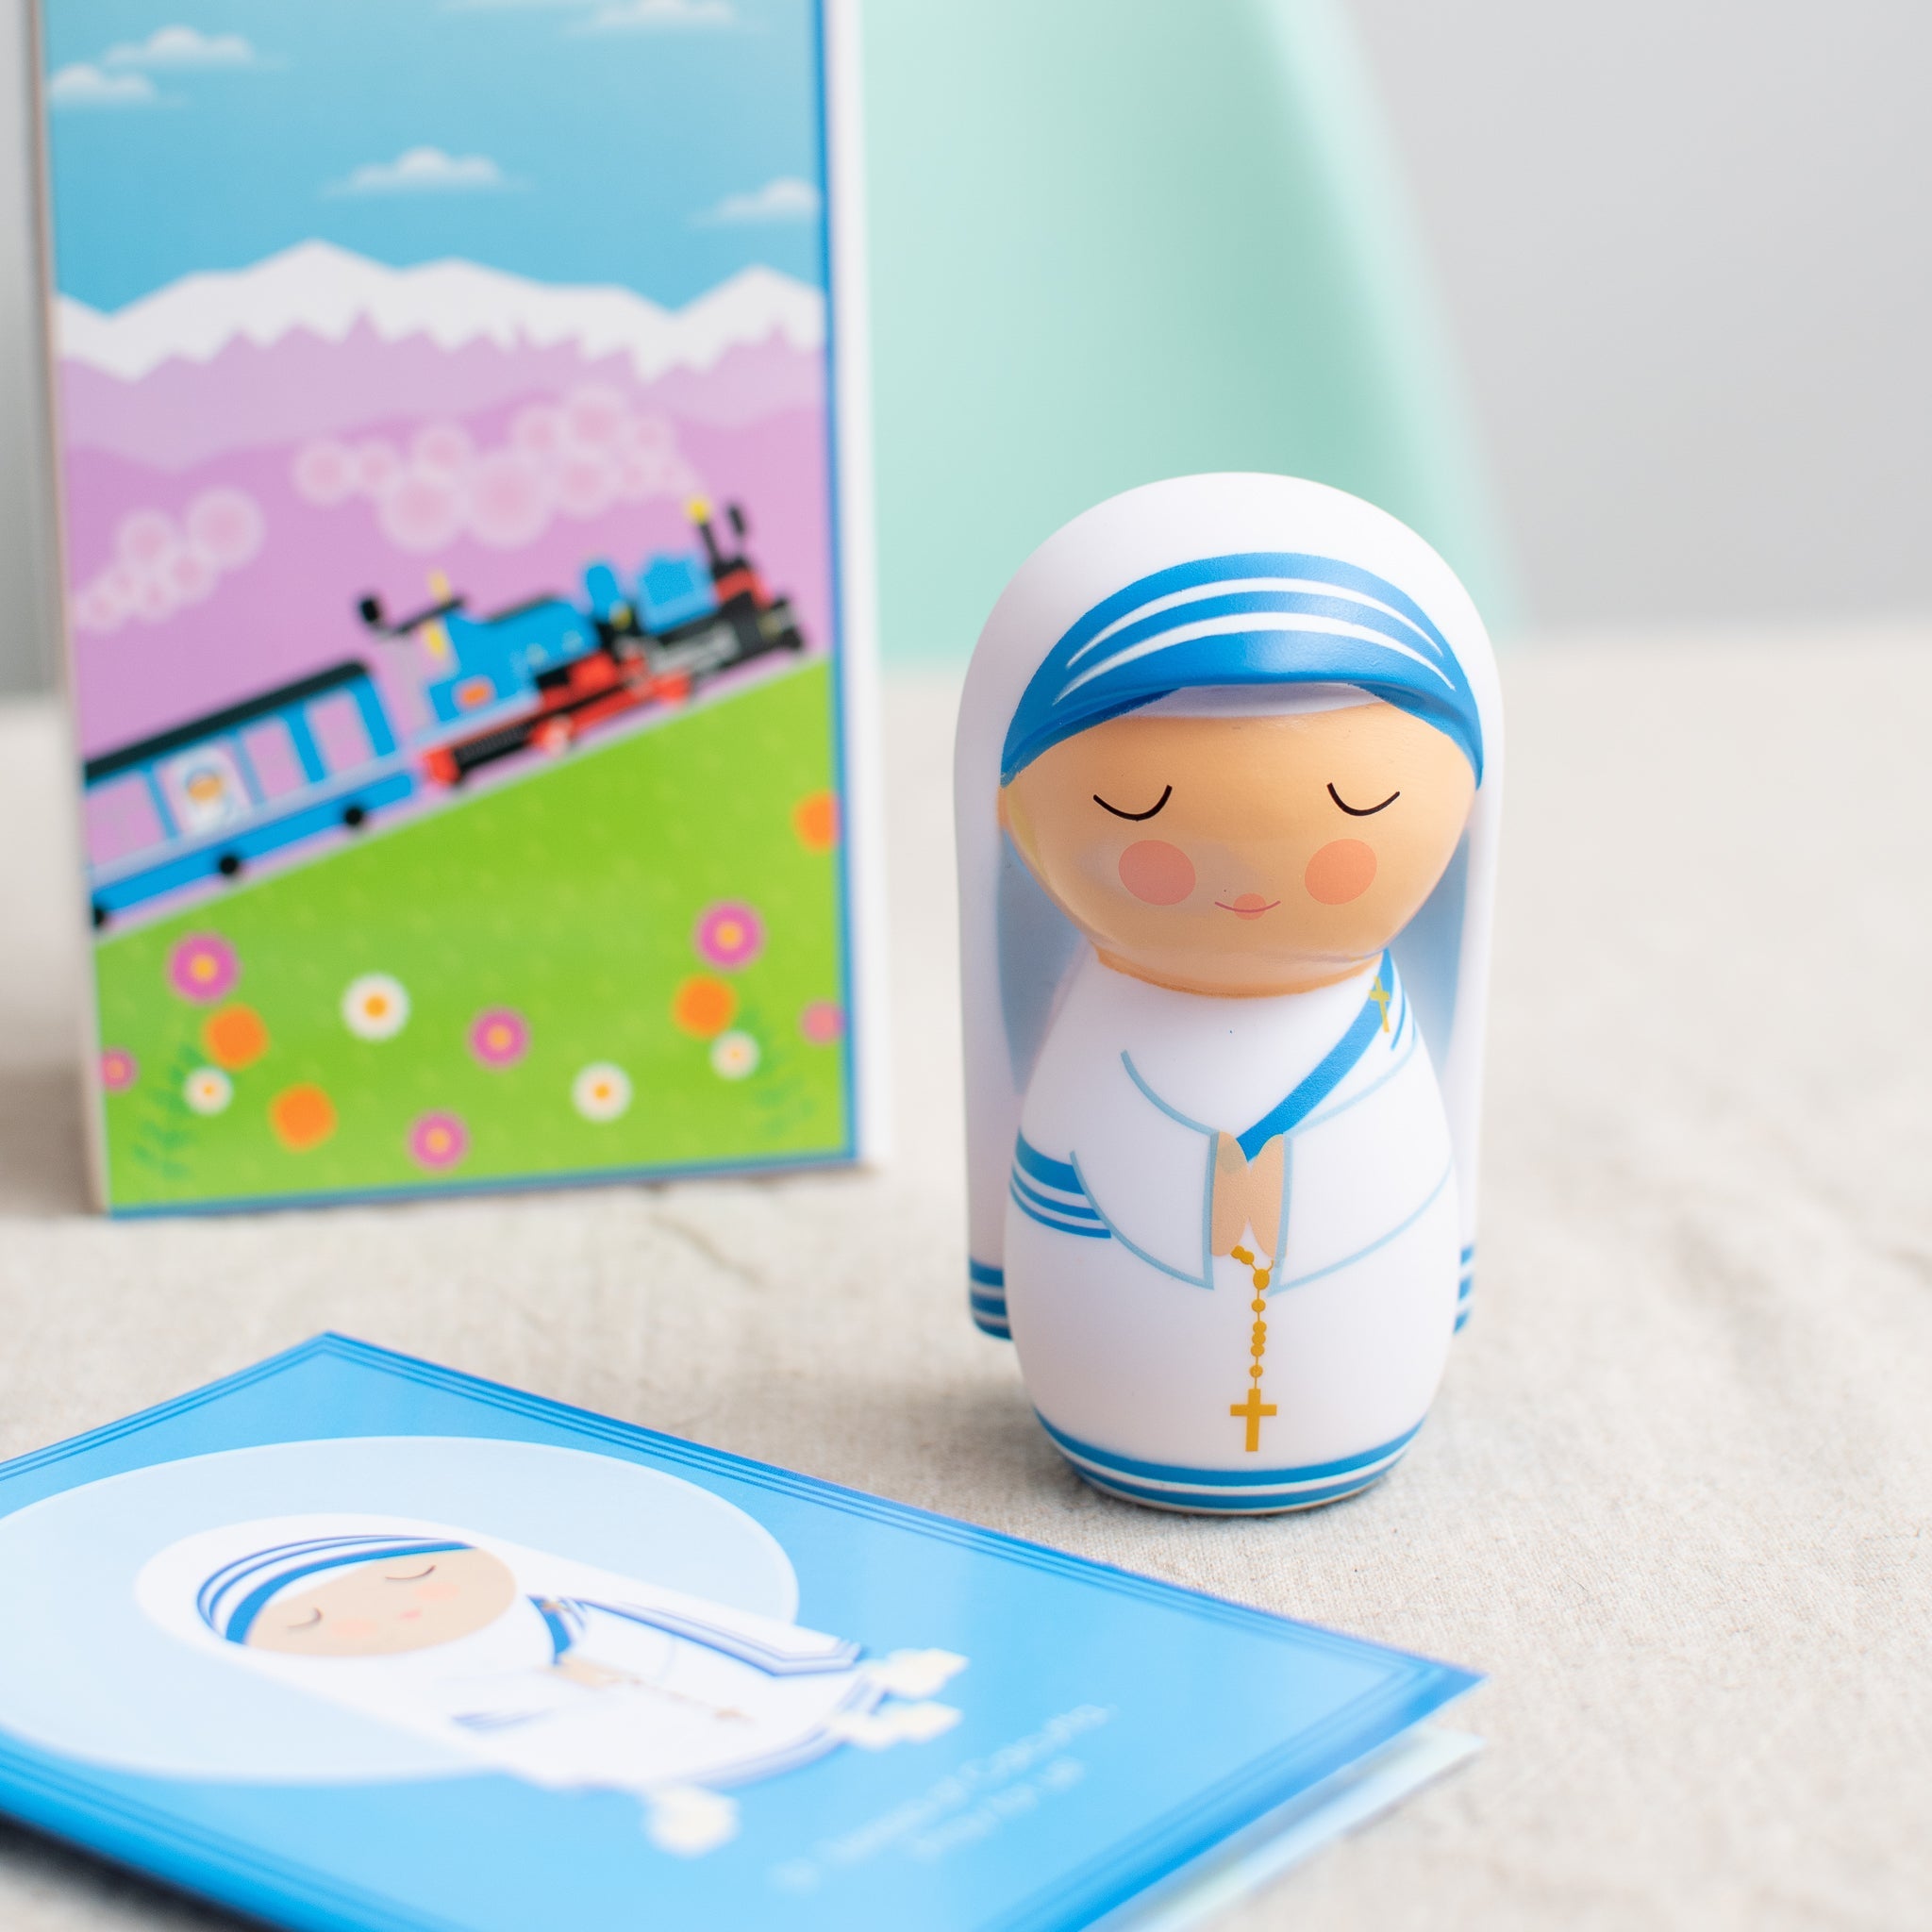 Saint Mother Teresa Of Calcutta Shining Light Doll